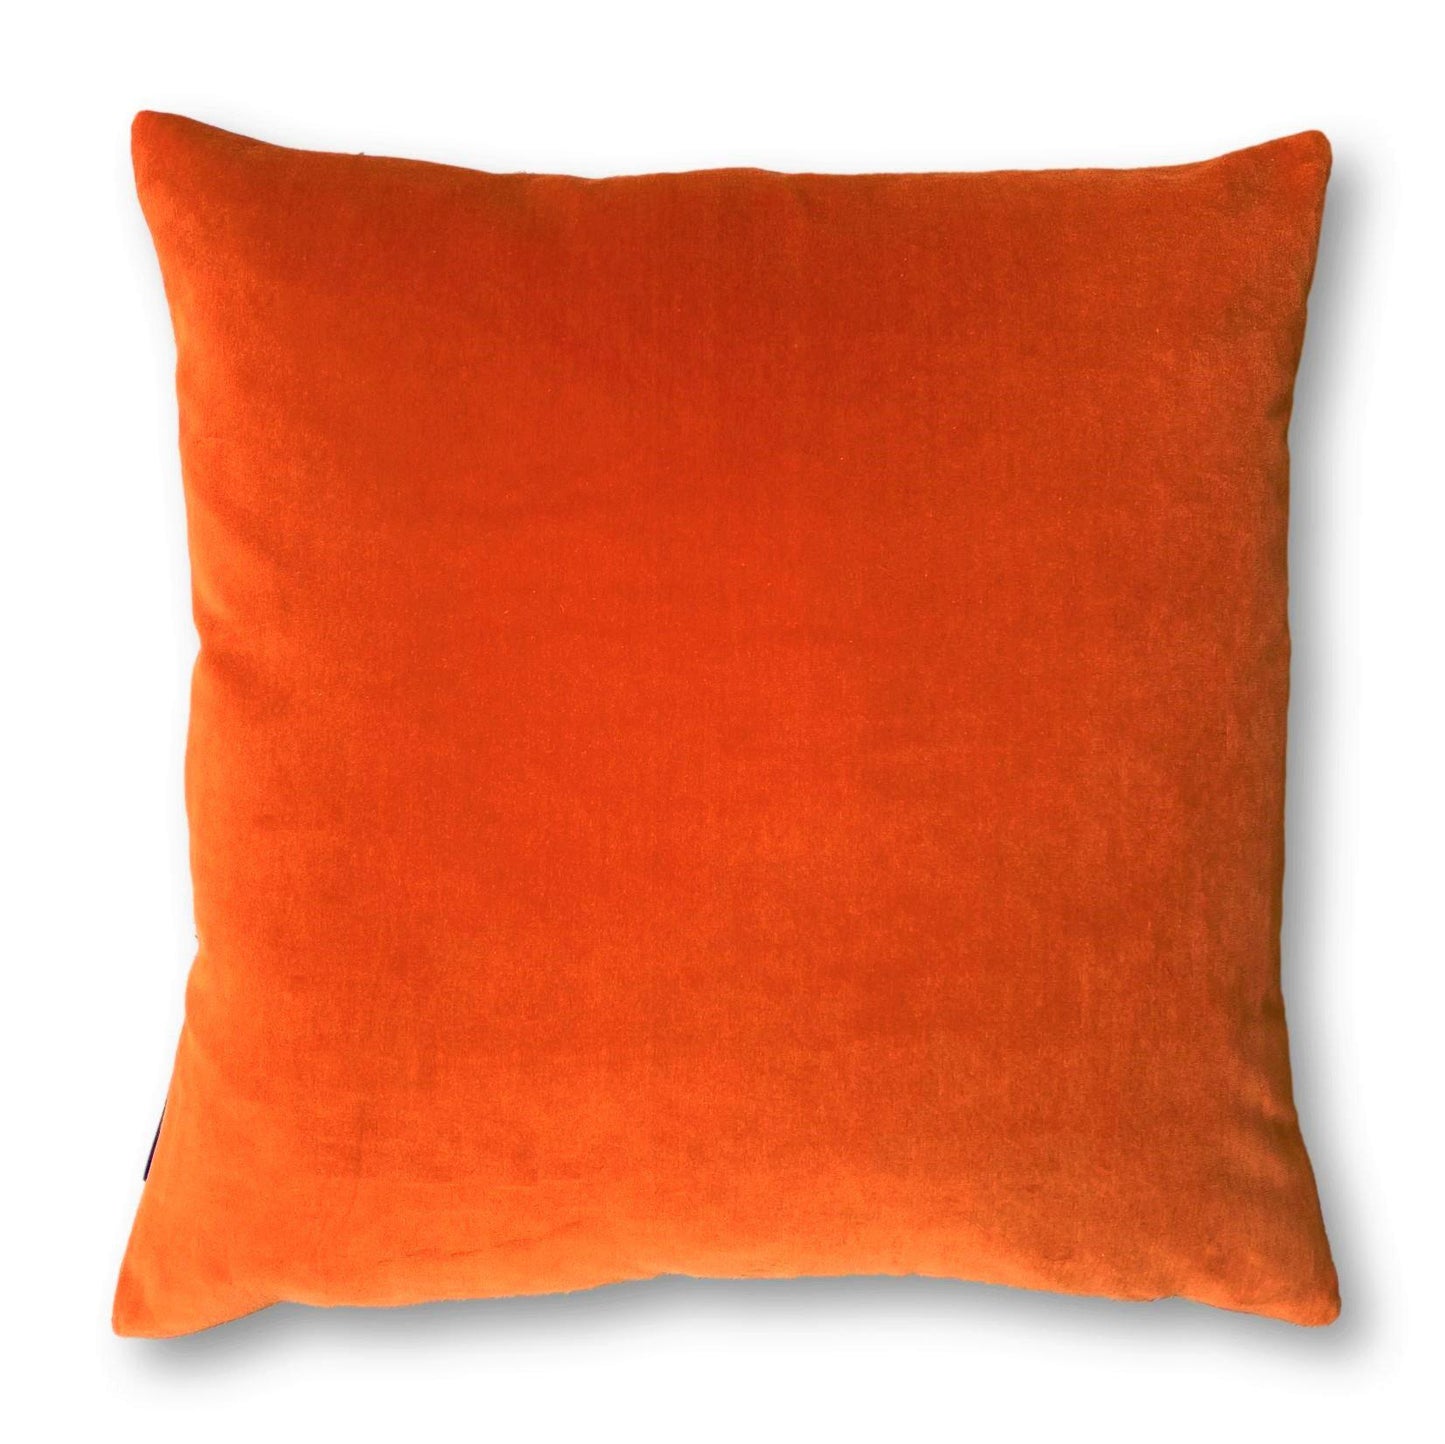 blue and orange cushions